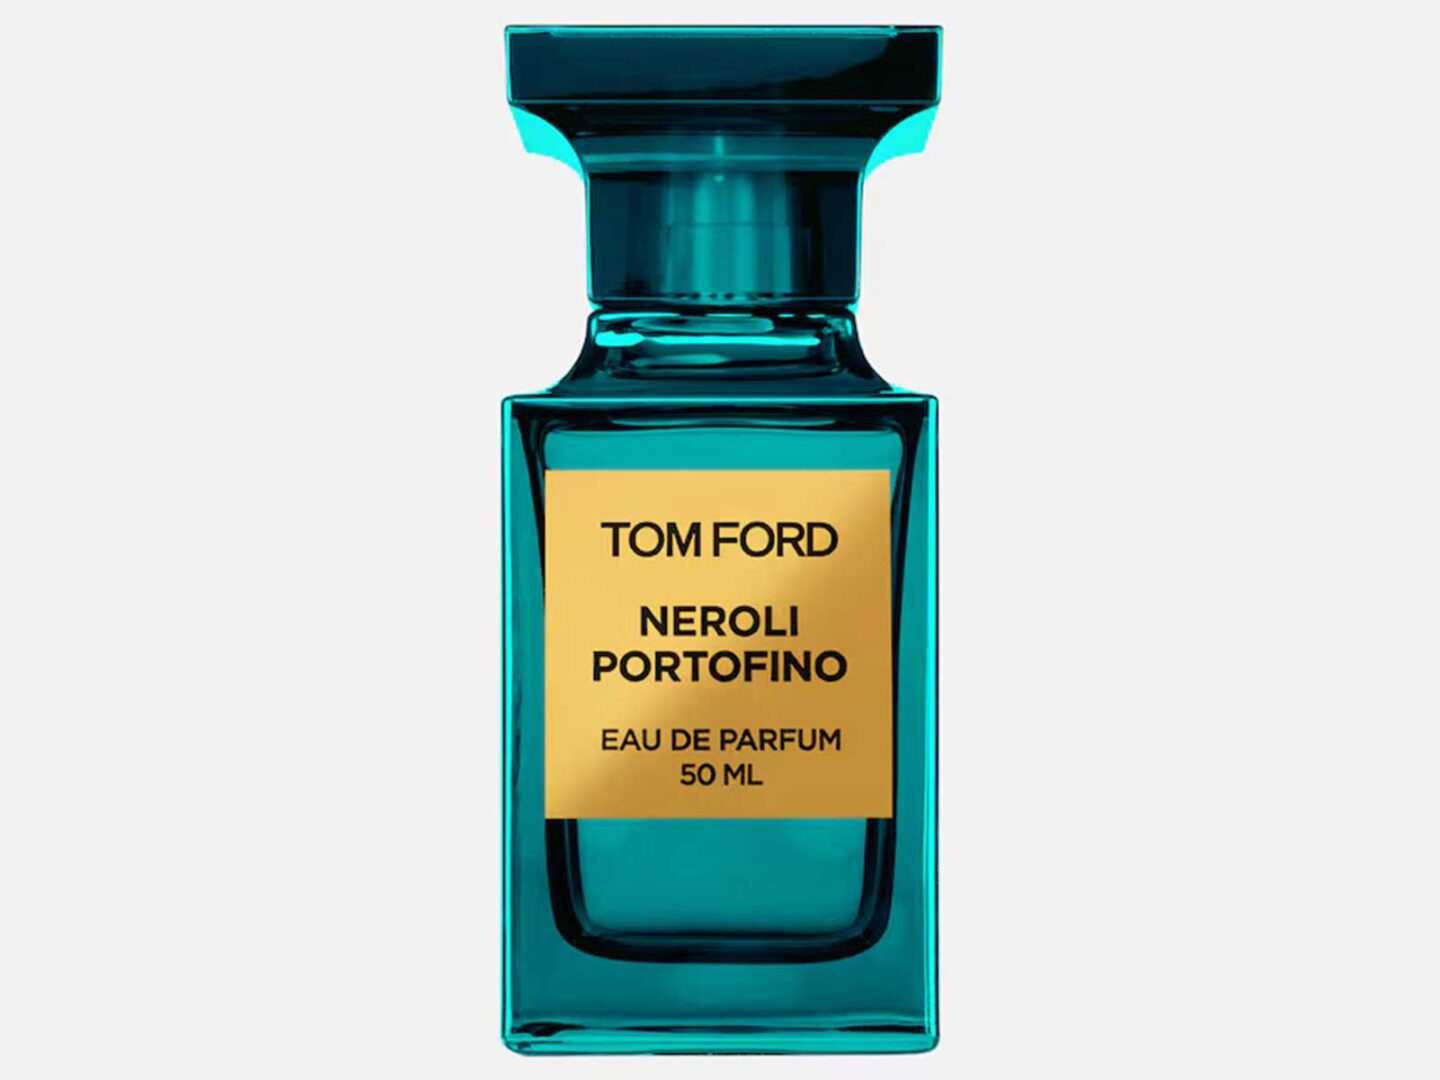 Tom Ford Beauty launches new perfume: Neroli Portofino